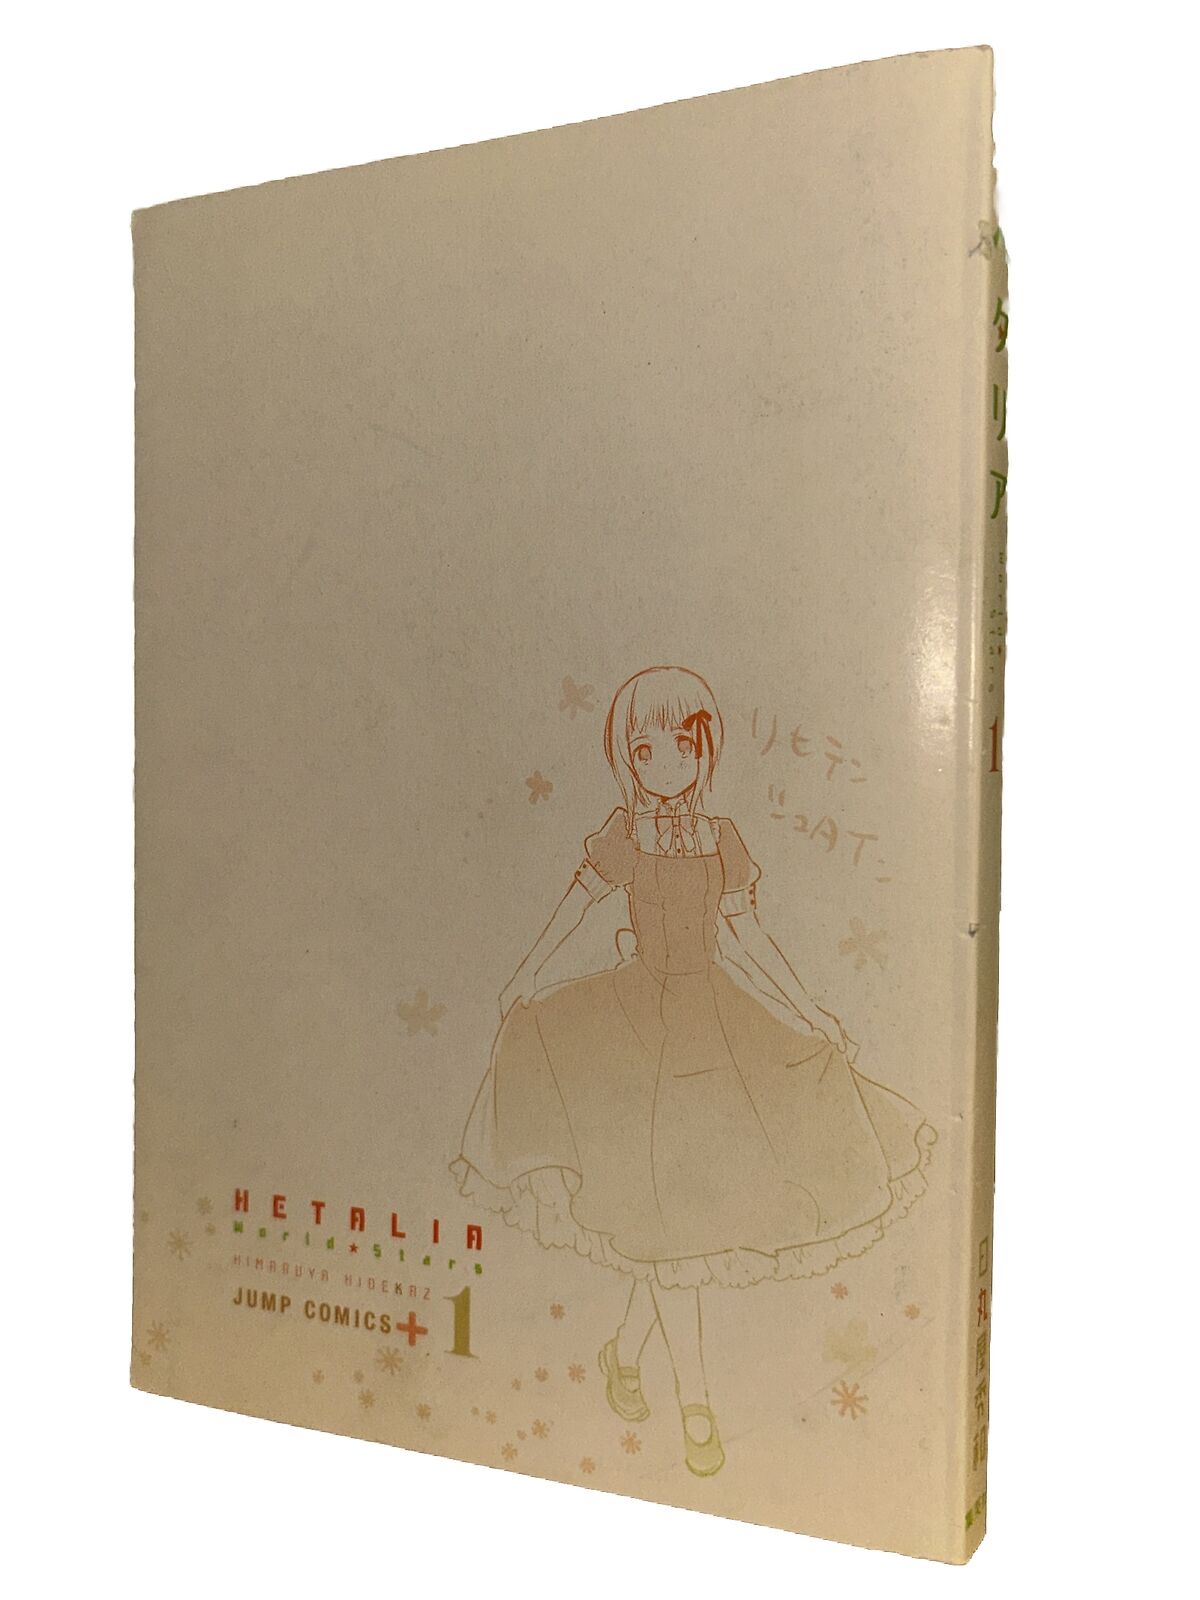 Hetalia World Stars ヘタリア ワールド☆スターズ (Vol. 1) [Japanese language manga]